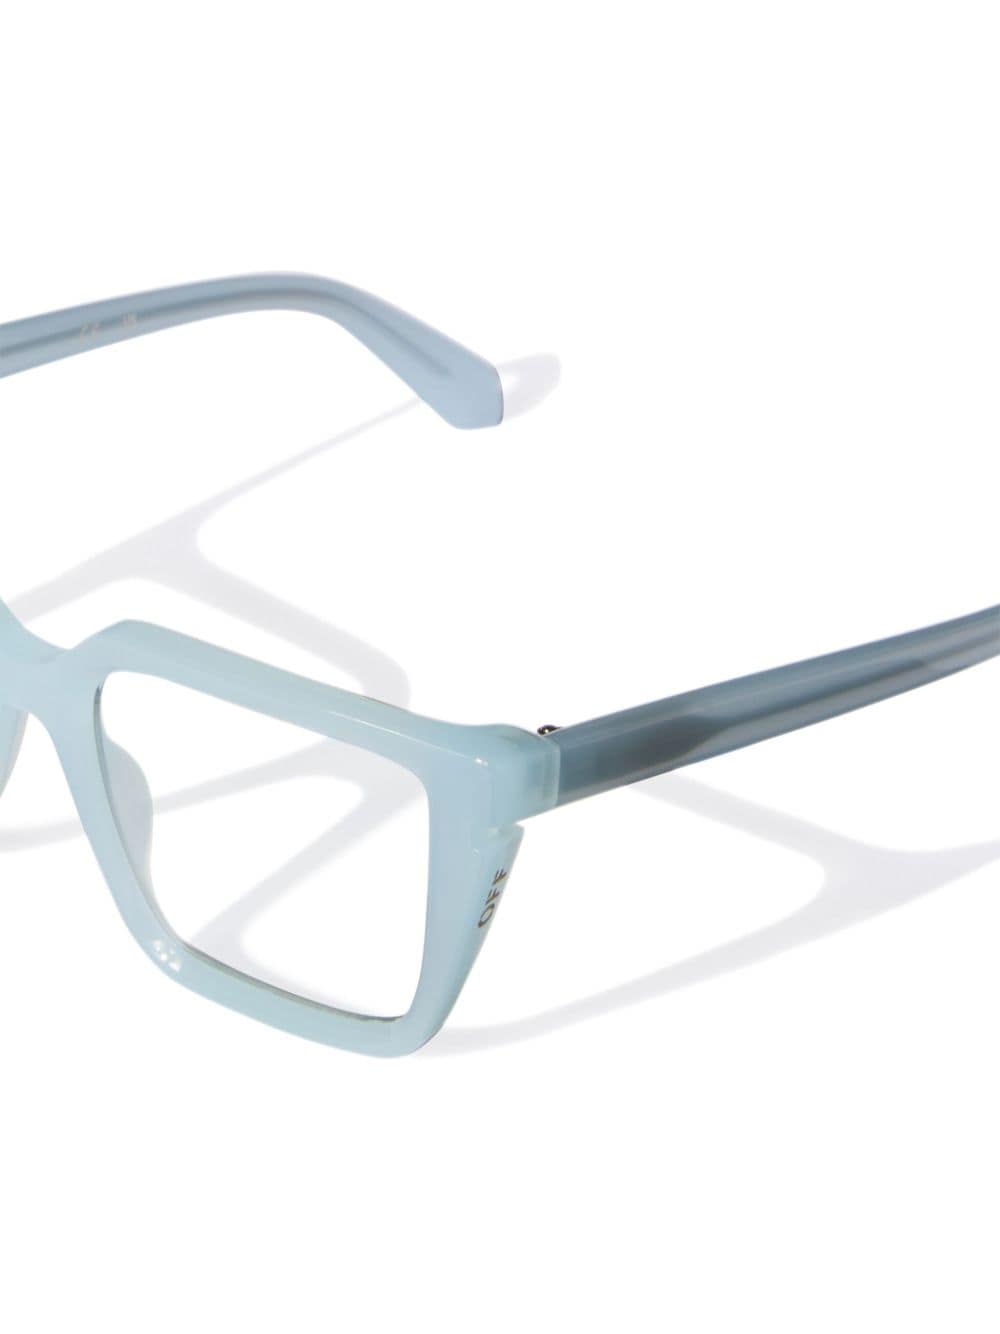 Off-White Optical Style 52 bril - Blauw